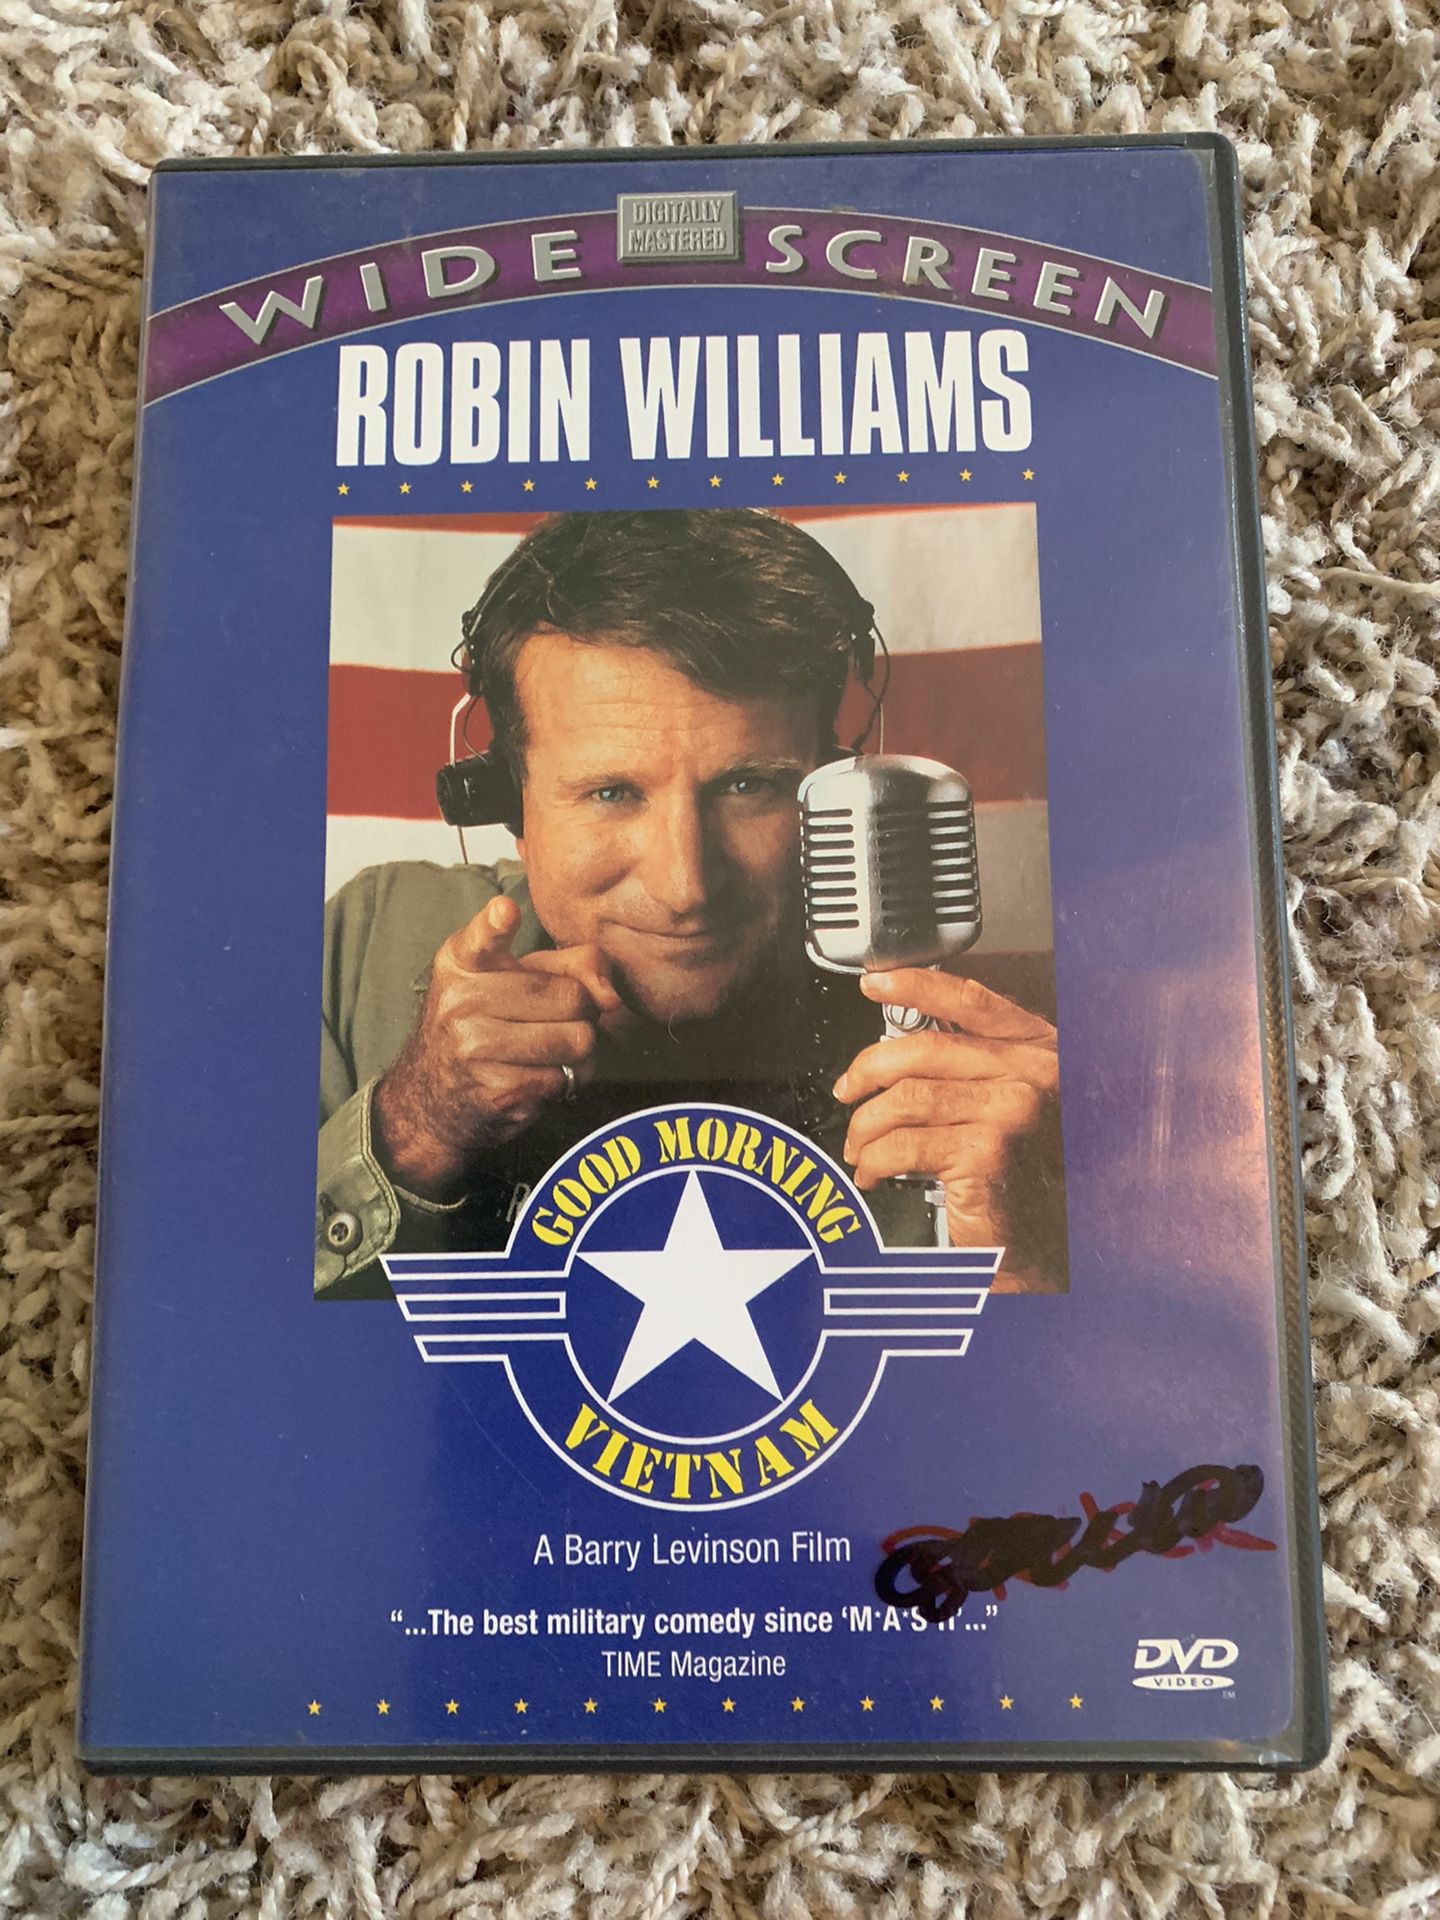 Robin Williams in good morning Vietnam on DVD